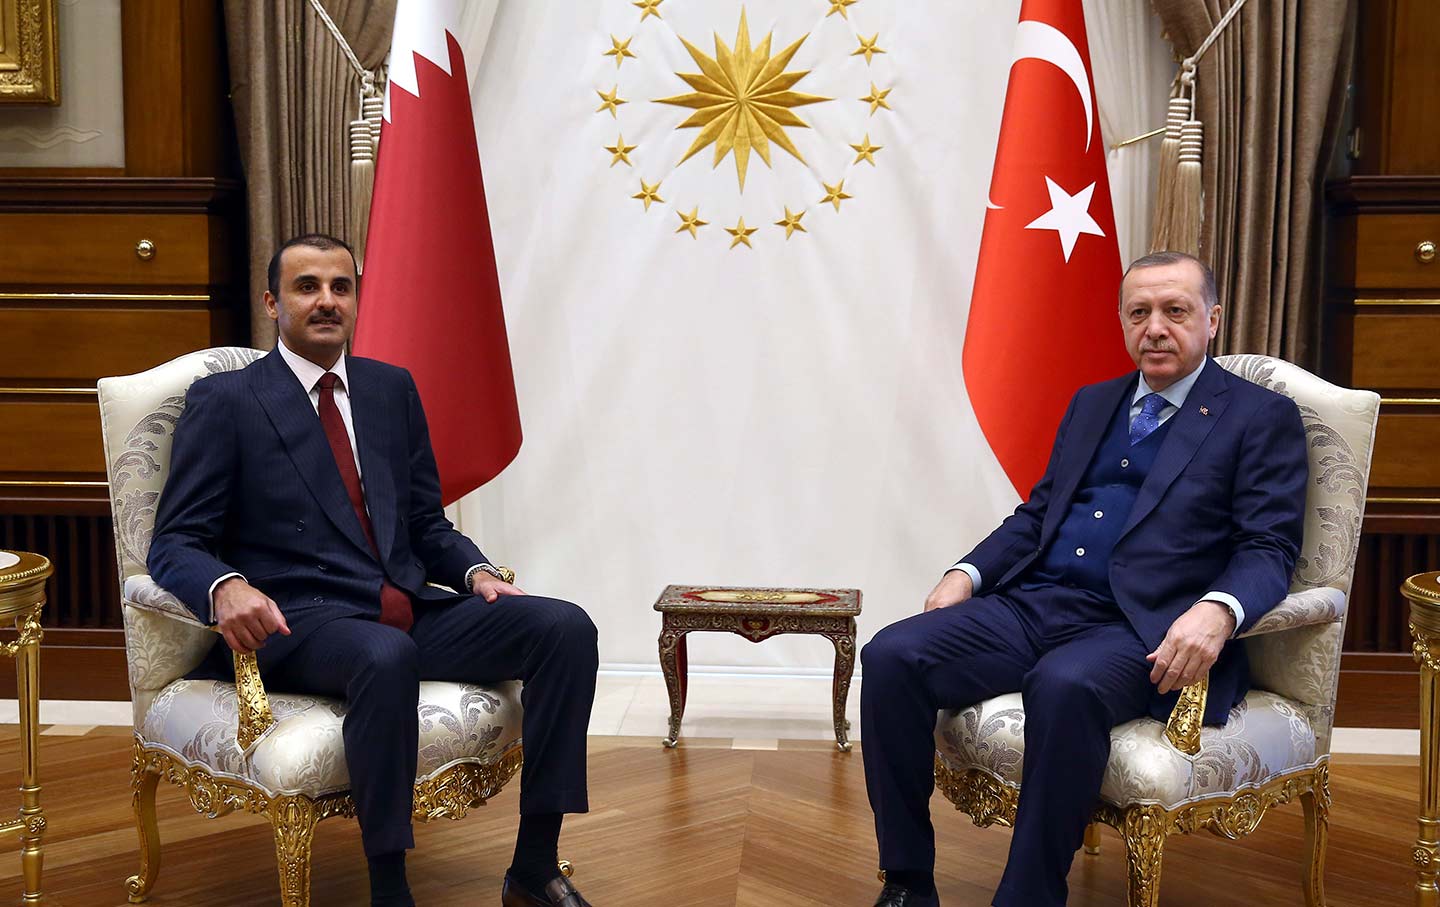 Qatar's Al Thani and Turkey's Erdogan